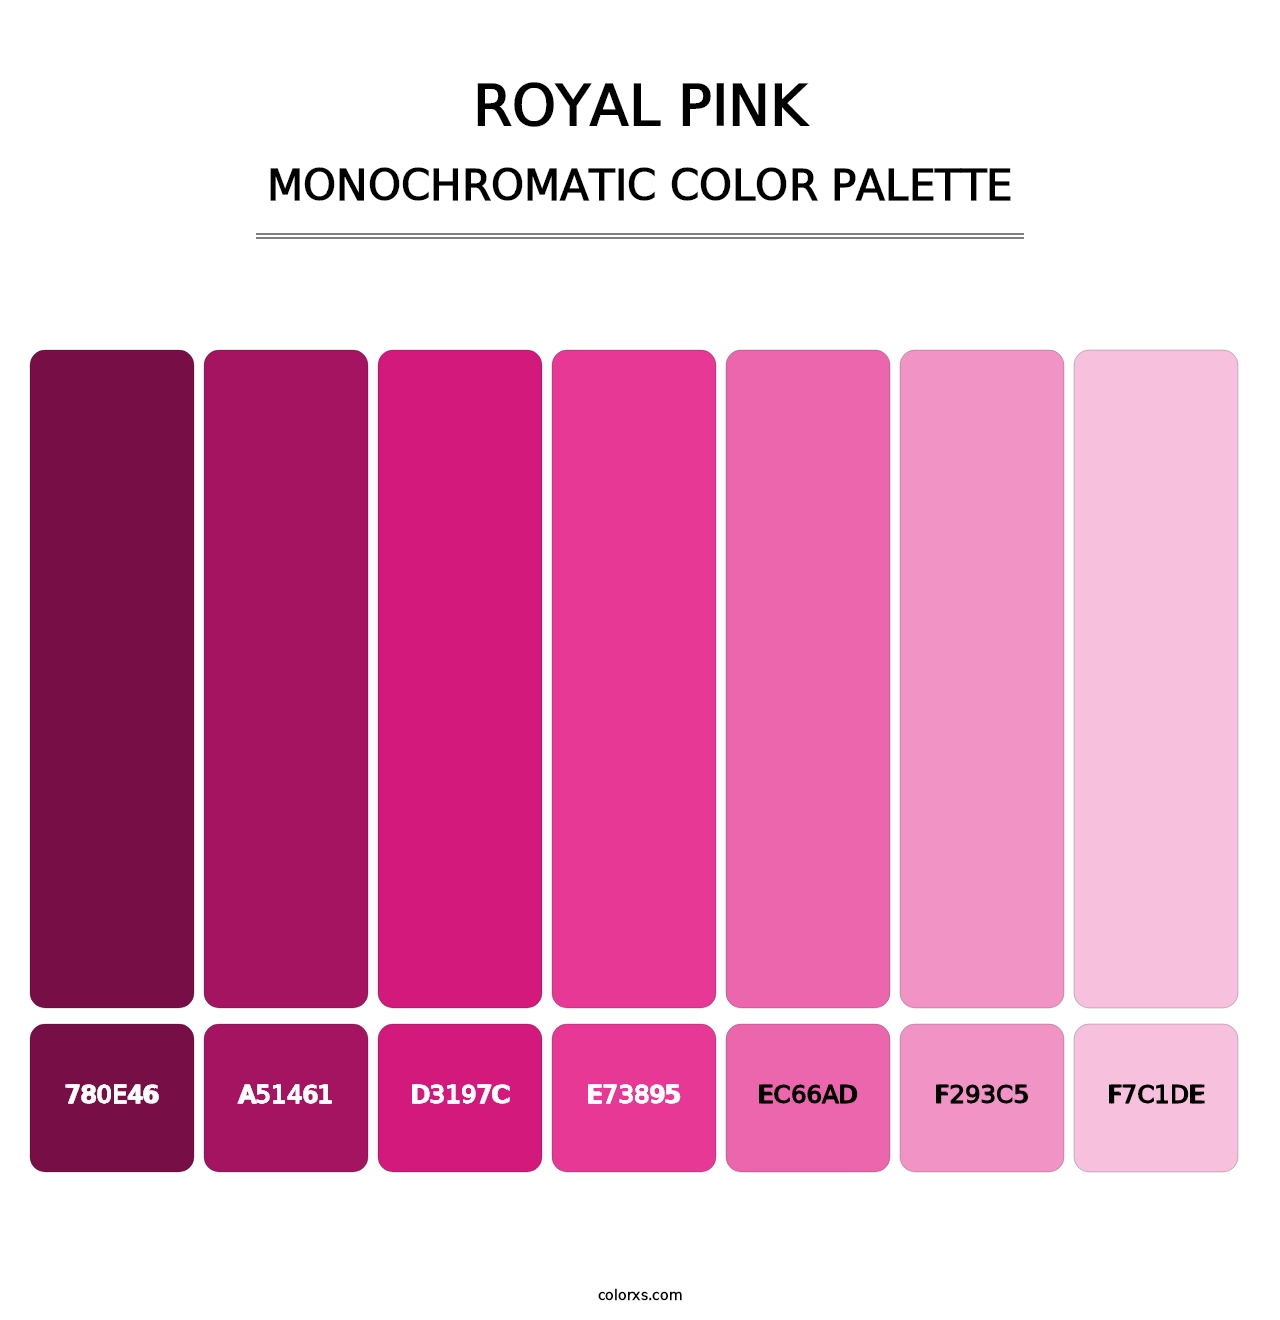 Royal Pink - Monochromatic Color Palette